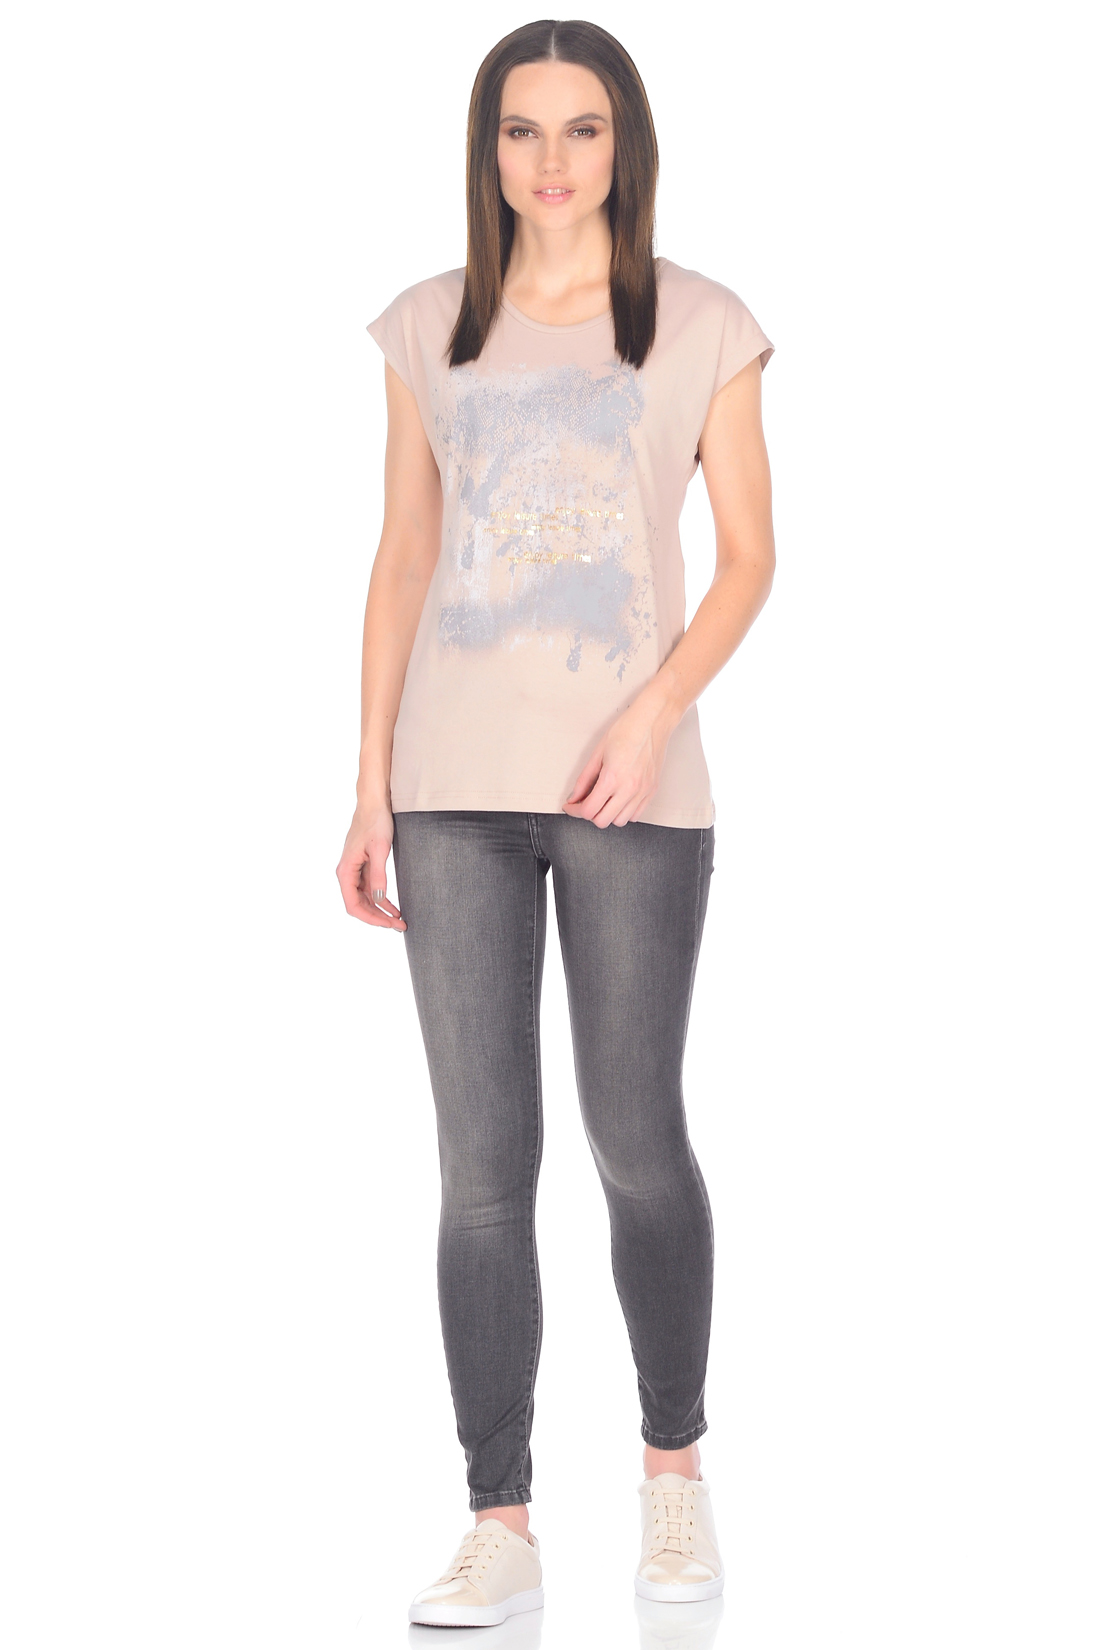 Бежевая футболка с принтом (арт. baon B238085), размер XXL, цвет бежевый Бежевая футболка с принтом (арт. baon B238085) - фото 3